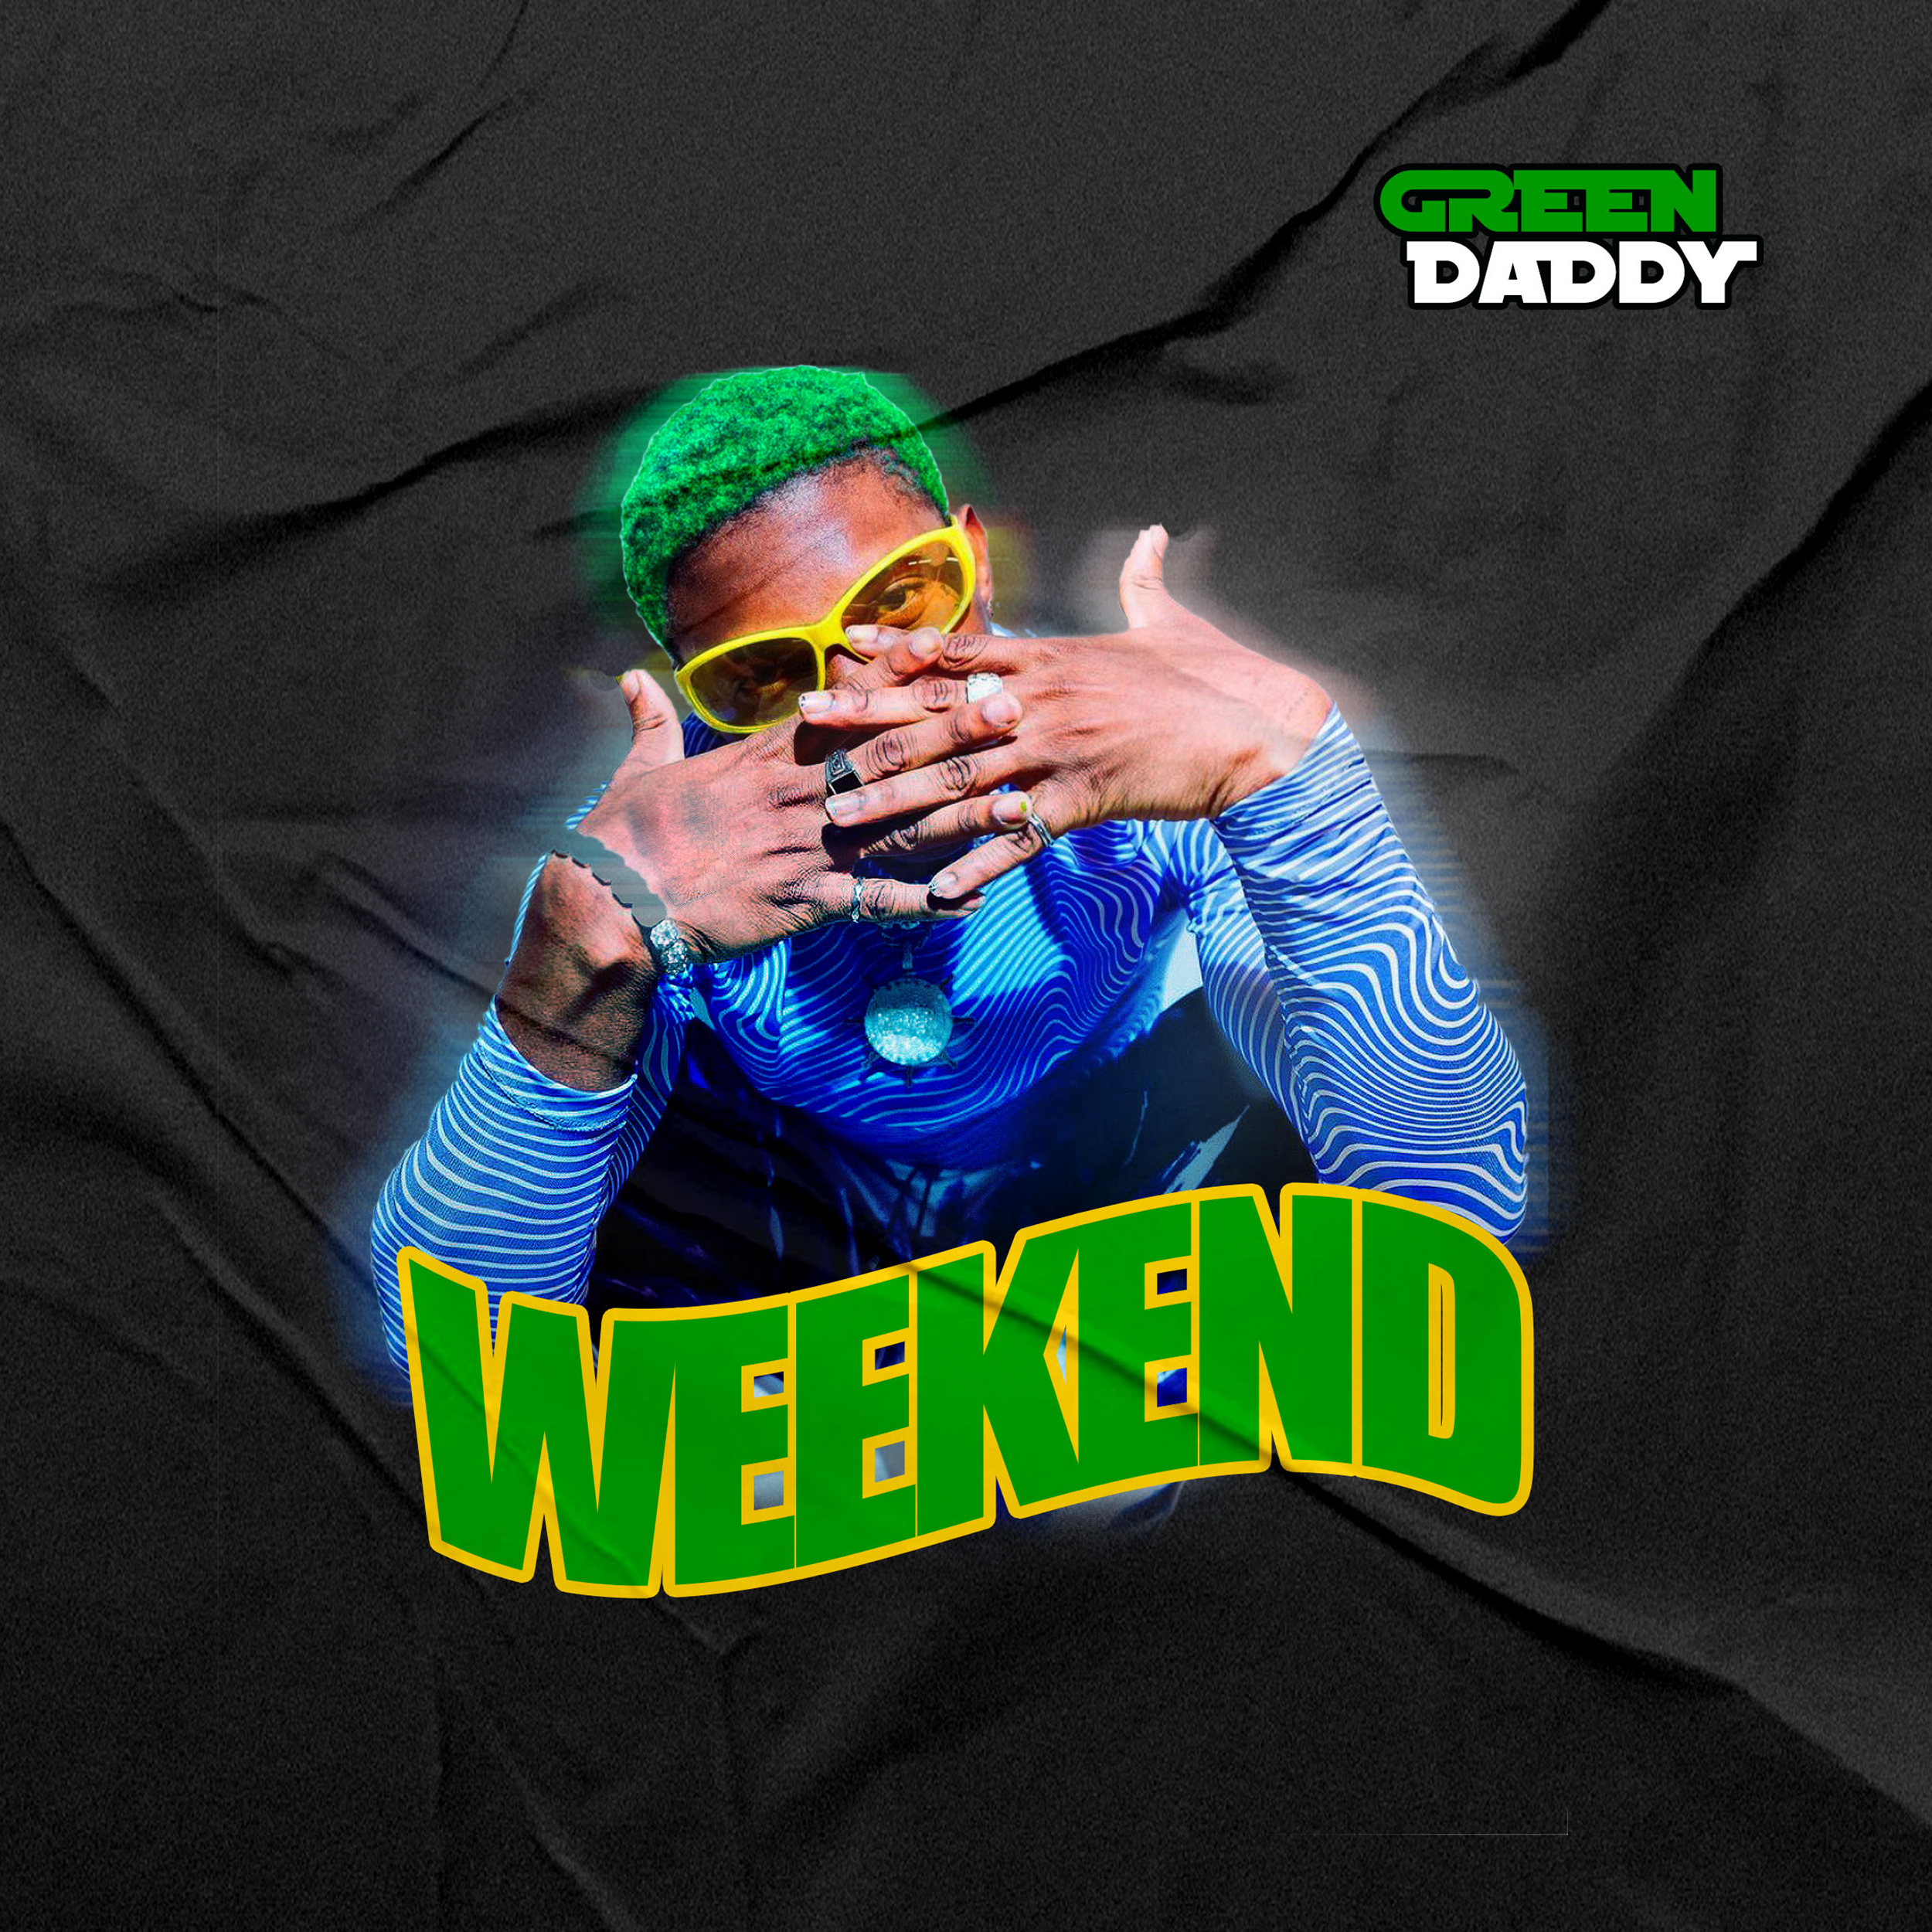 Green Daddy - Weekend